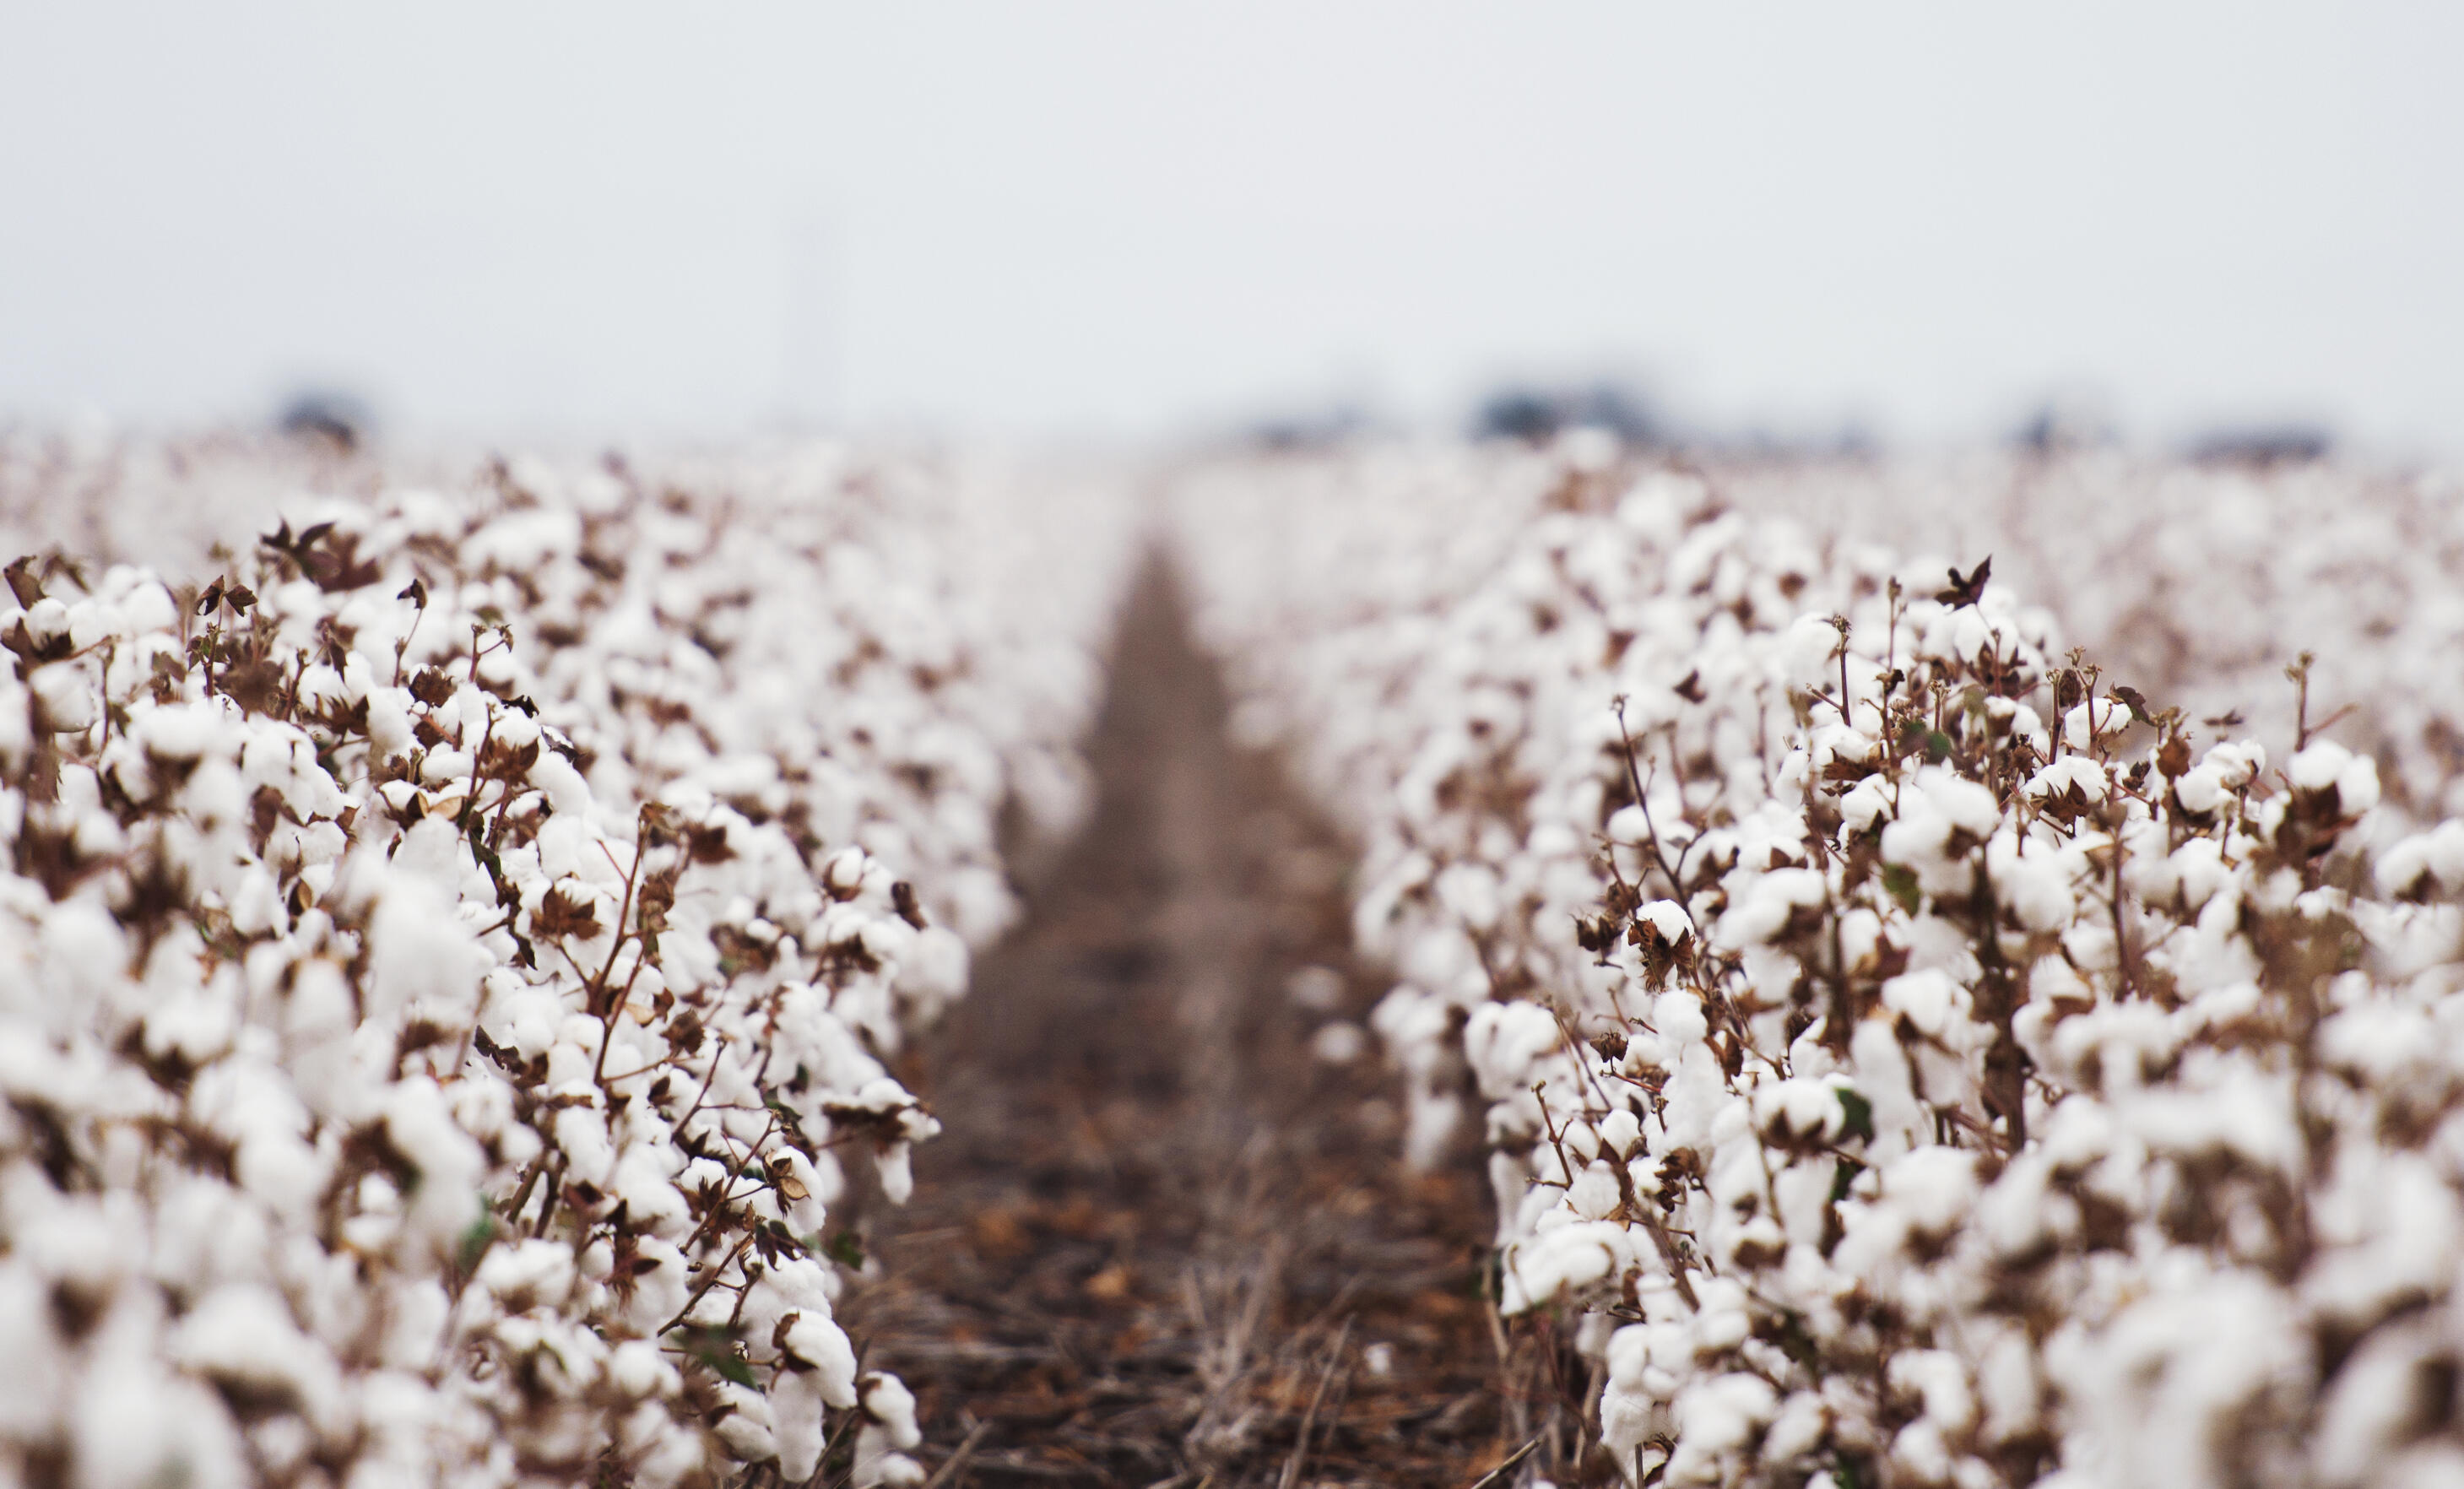  Cotton field